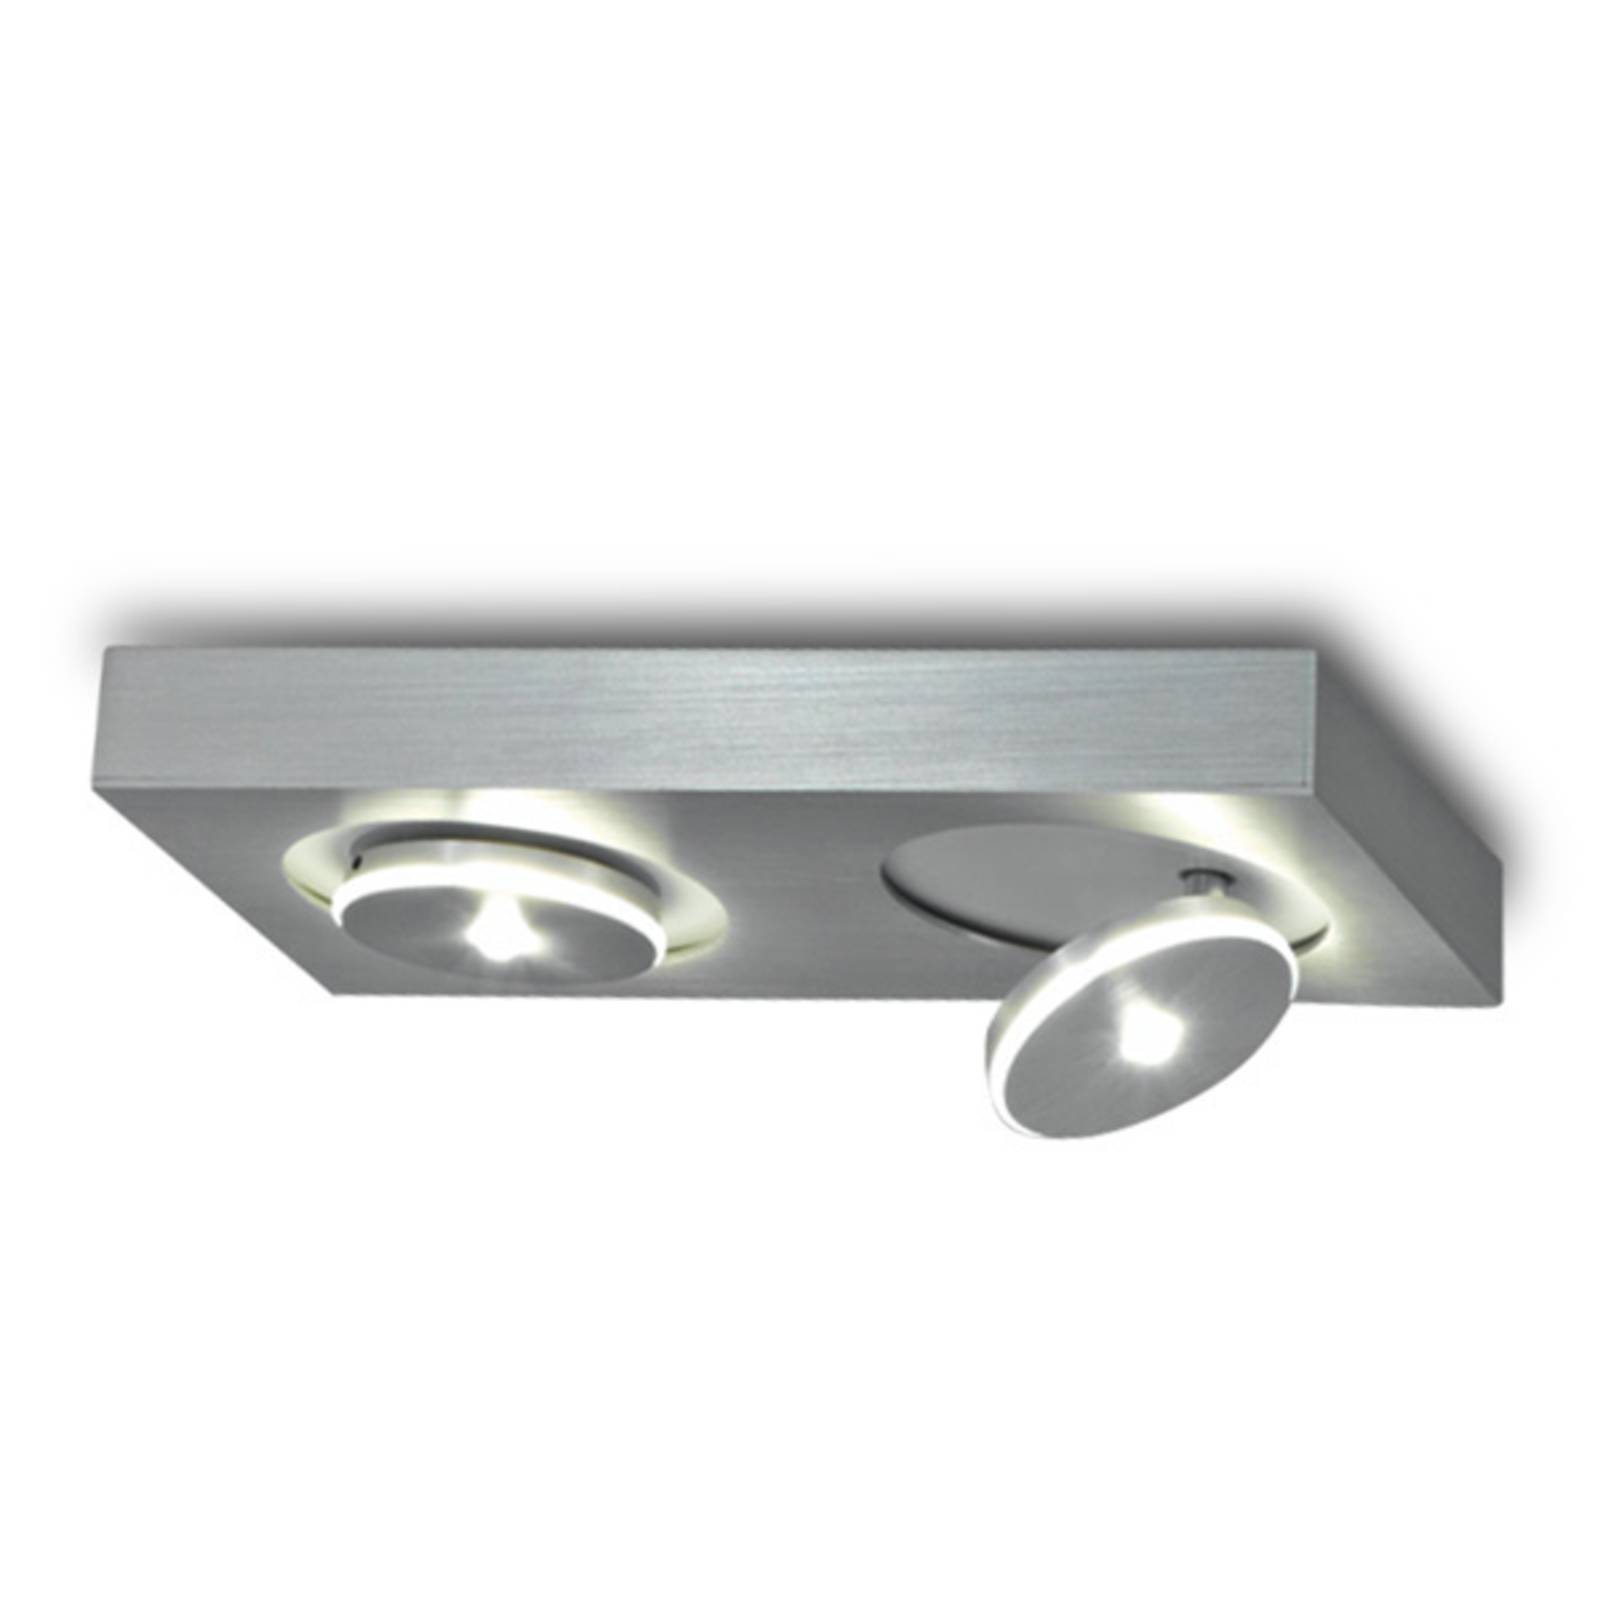 verkiezing doe niet Verplaatsing Moderne plafondlamp Spot It met LED | Lampen24.be